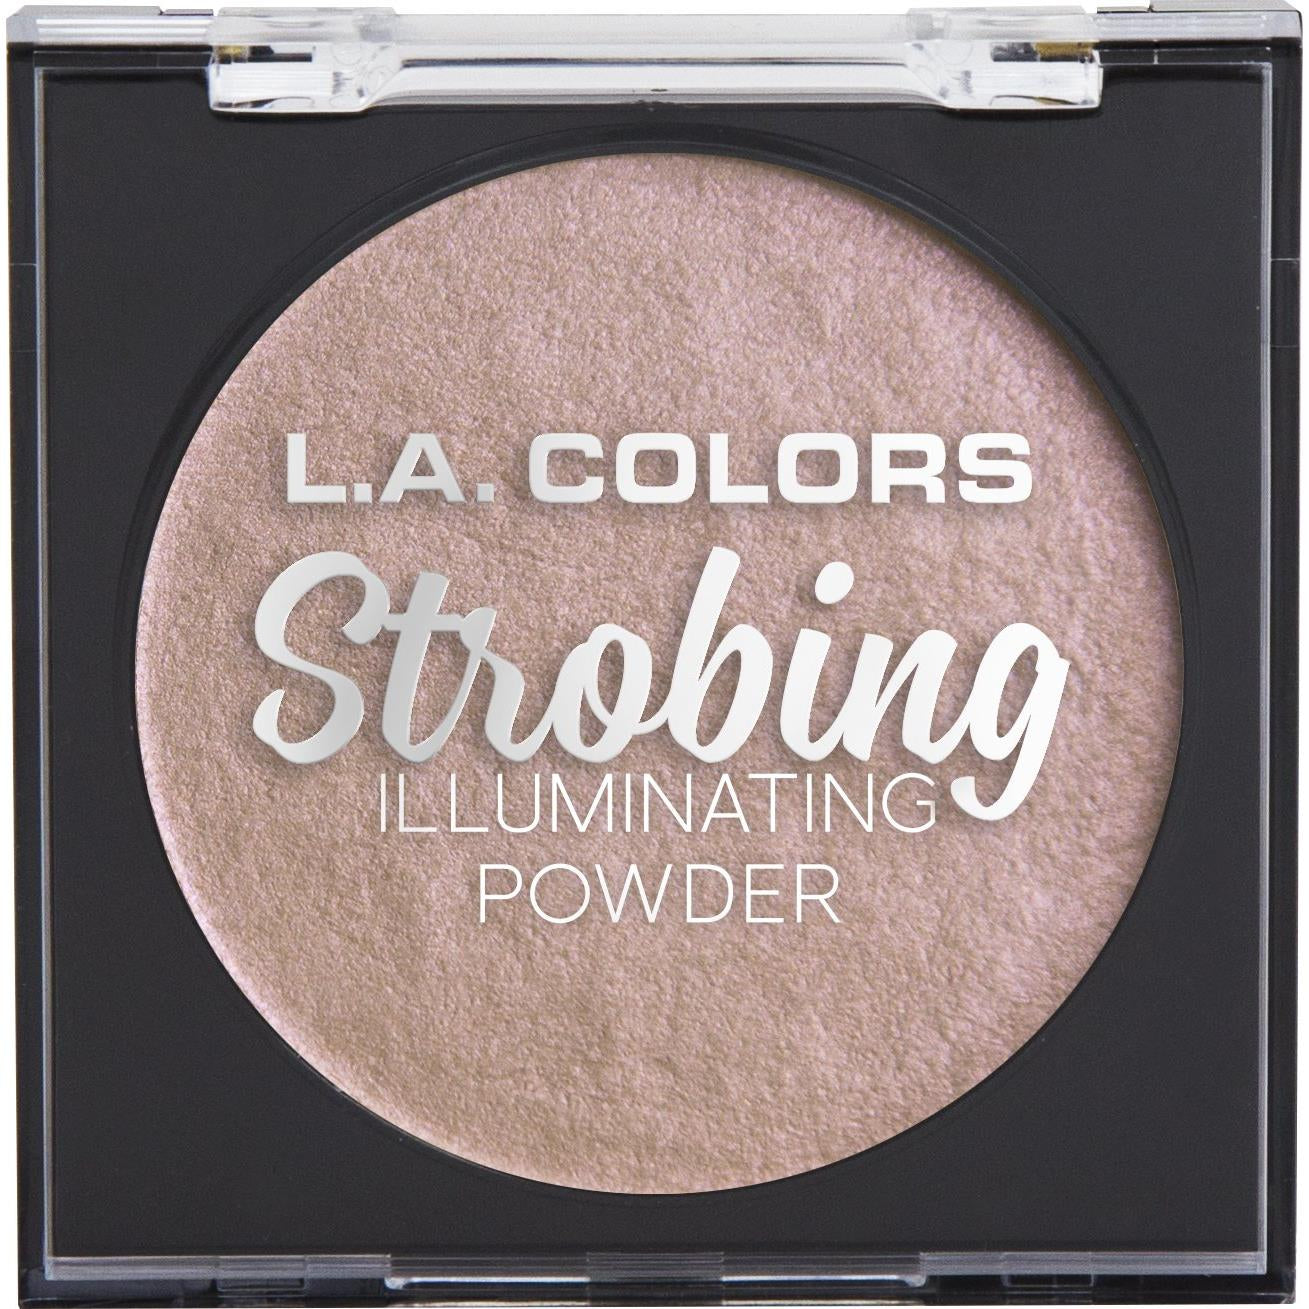 L.A. COLORS Strobing Illuminating Powder, Flashing Pink, 1 Ounce